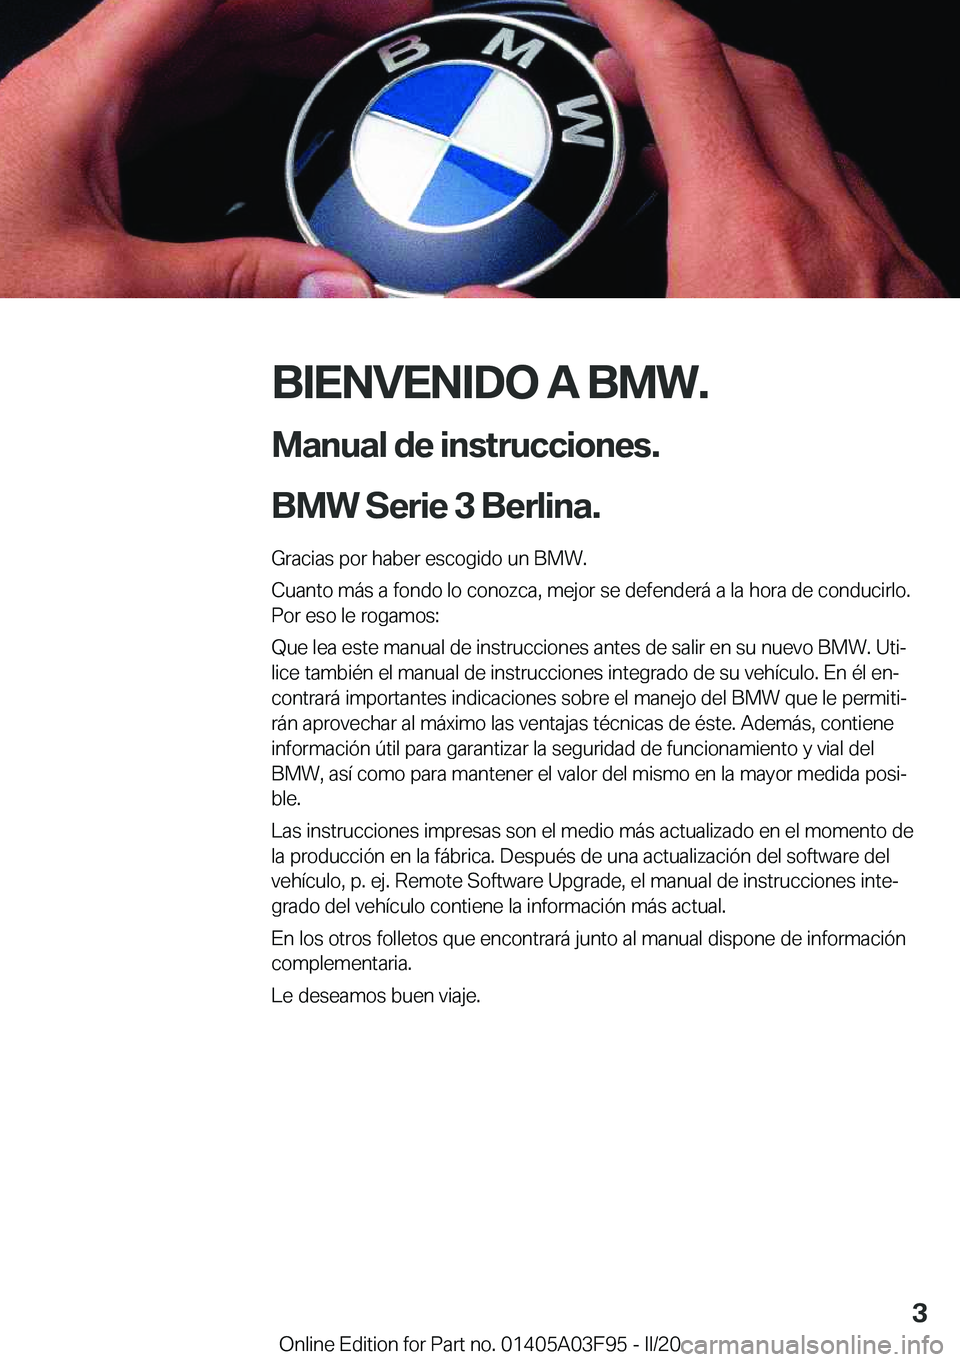 BMW 3 SERIES 2020  Manuales de Empleo (in Spanish) �B�I�E�N�V�E�N�I�D�O��A��B�M�W�.
�M�a�n�u�a�l��d�e��i�n�s�t�r�u�c�c�i�o�n�e�s�.
�B�M�W��S�e�r�i�e��3��B�e�r�l�i�n�a�. �G�r�a�c�i�a�s��p�o�r��h�a�b�e�r��e�s�c�o�g�i�d�o��u�n��B�M�W�.
�C�u�a